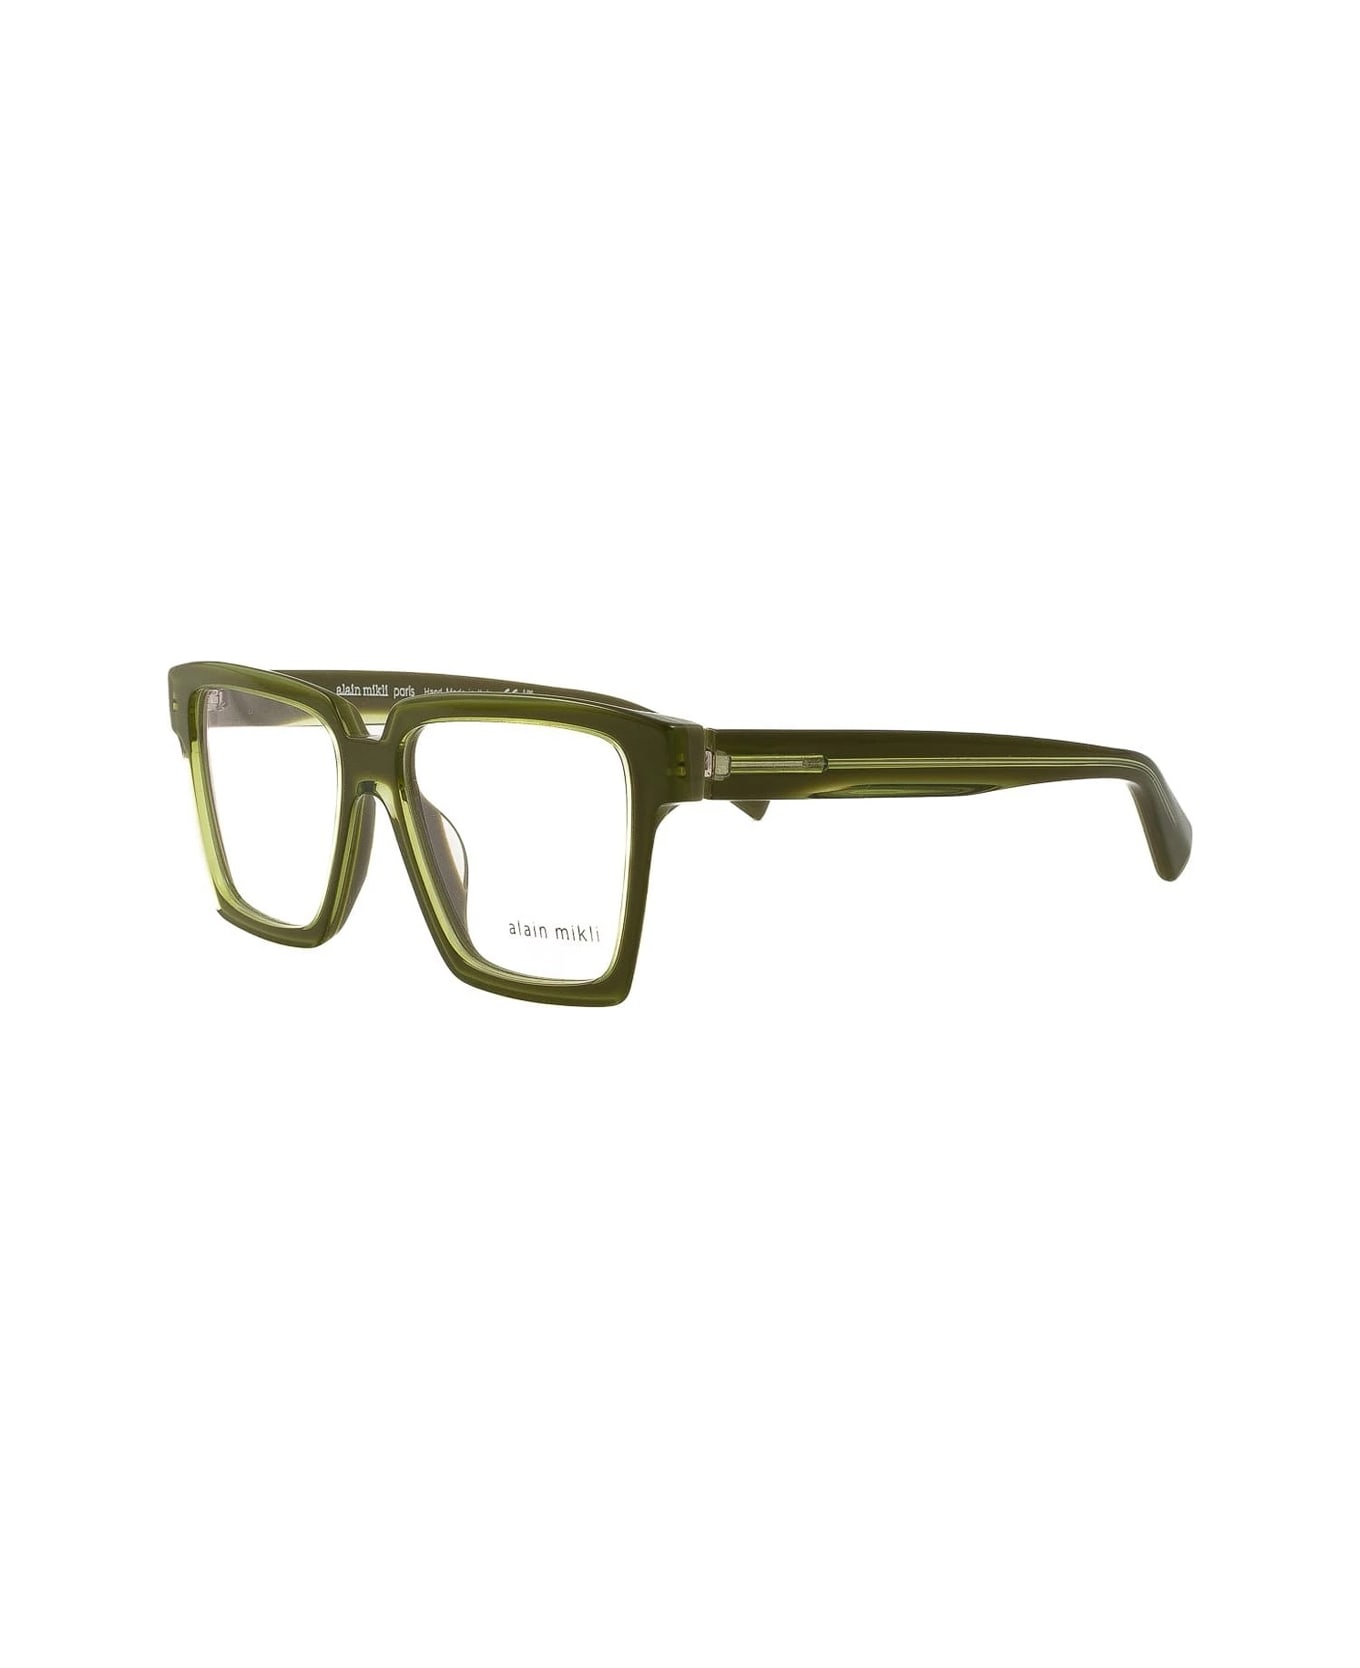 Alain Mikli A03162 006 Glasses - Verde アイウェア